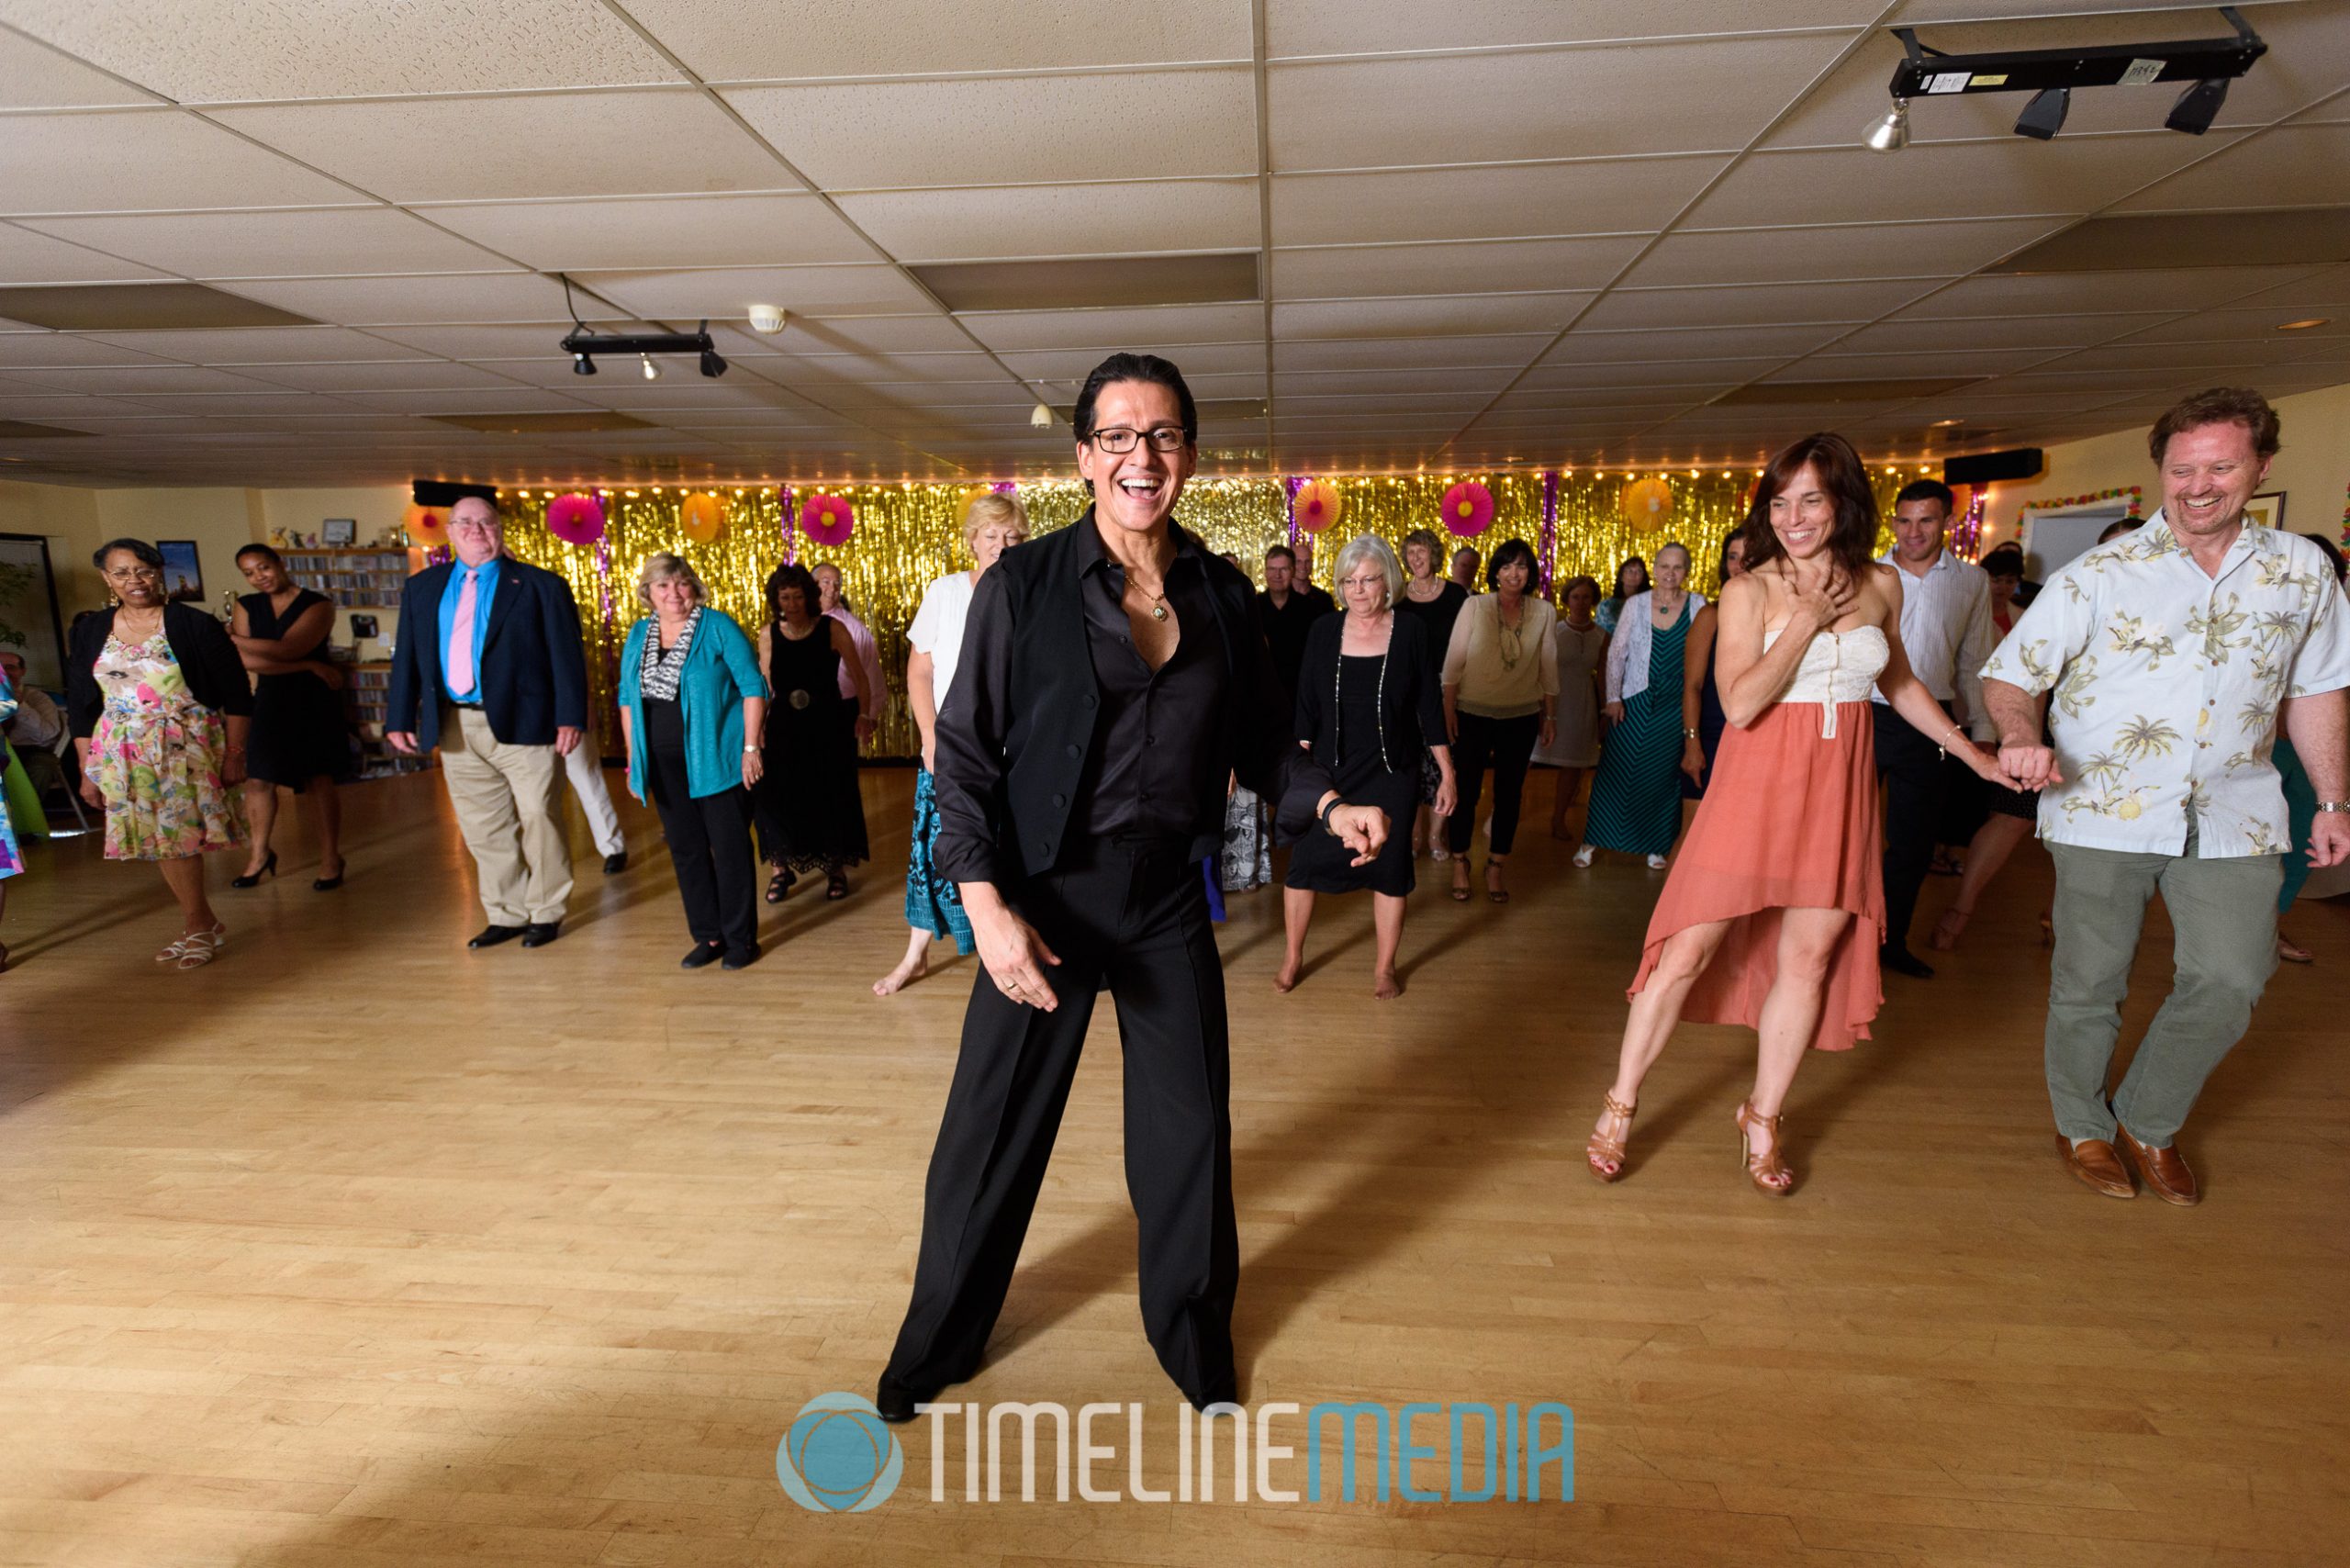 Carlos teaching a line dance ©TimeLine Media